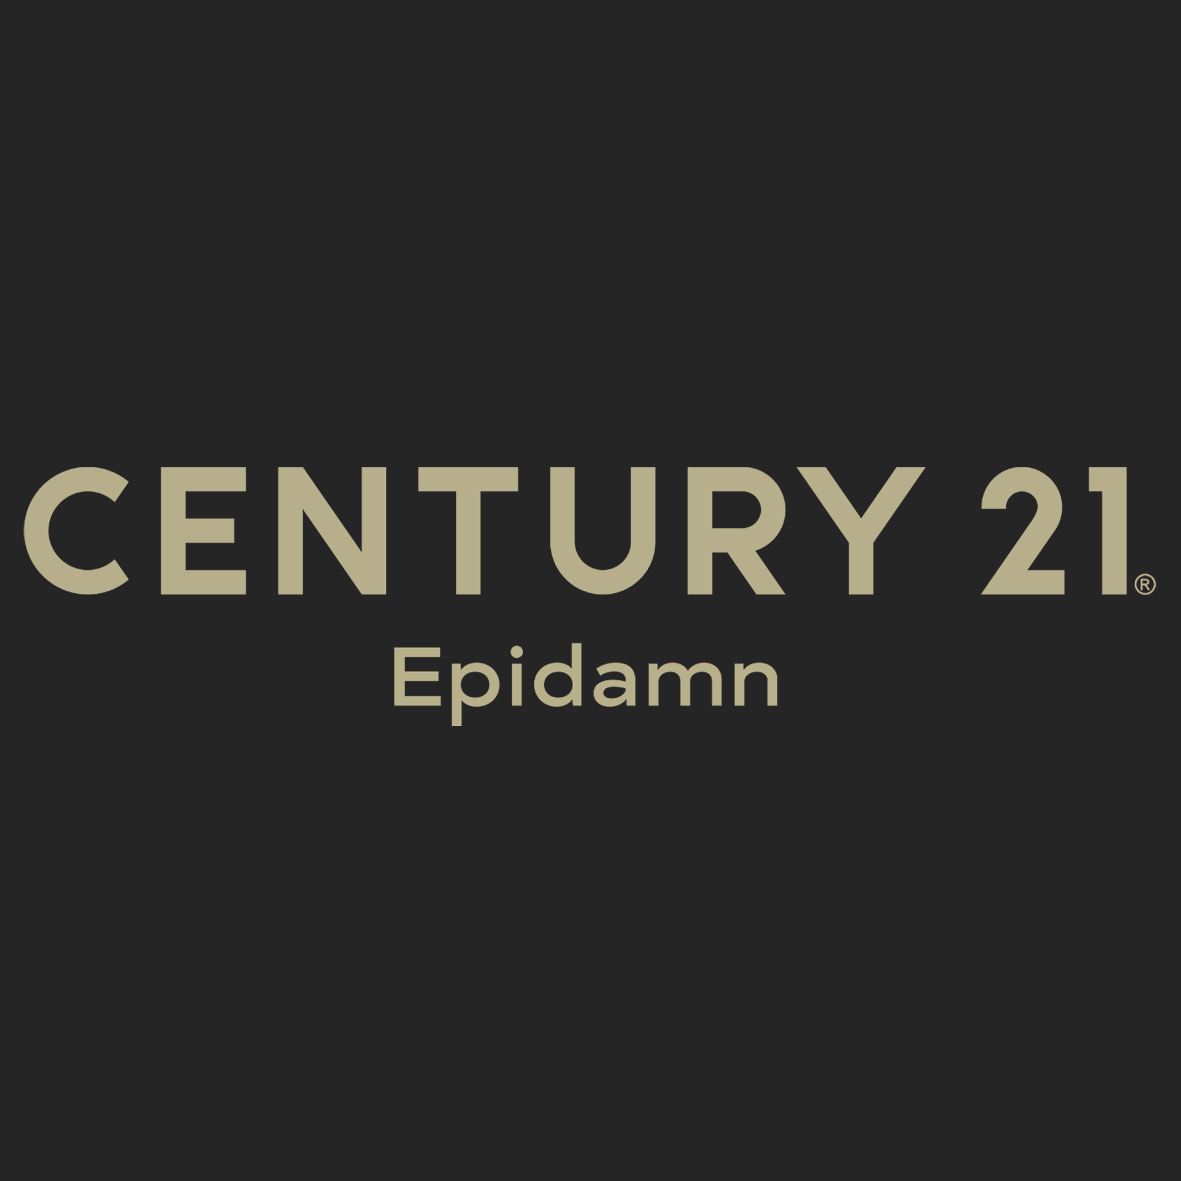 CENTURY 21 Epidamn